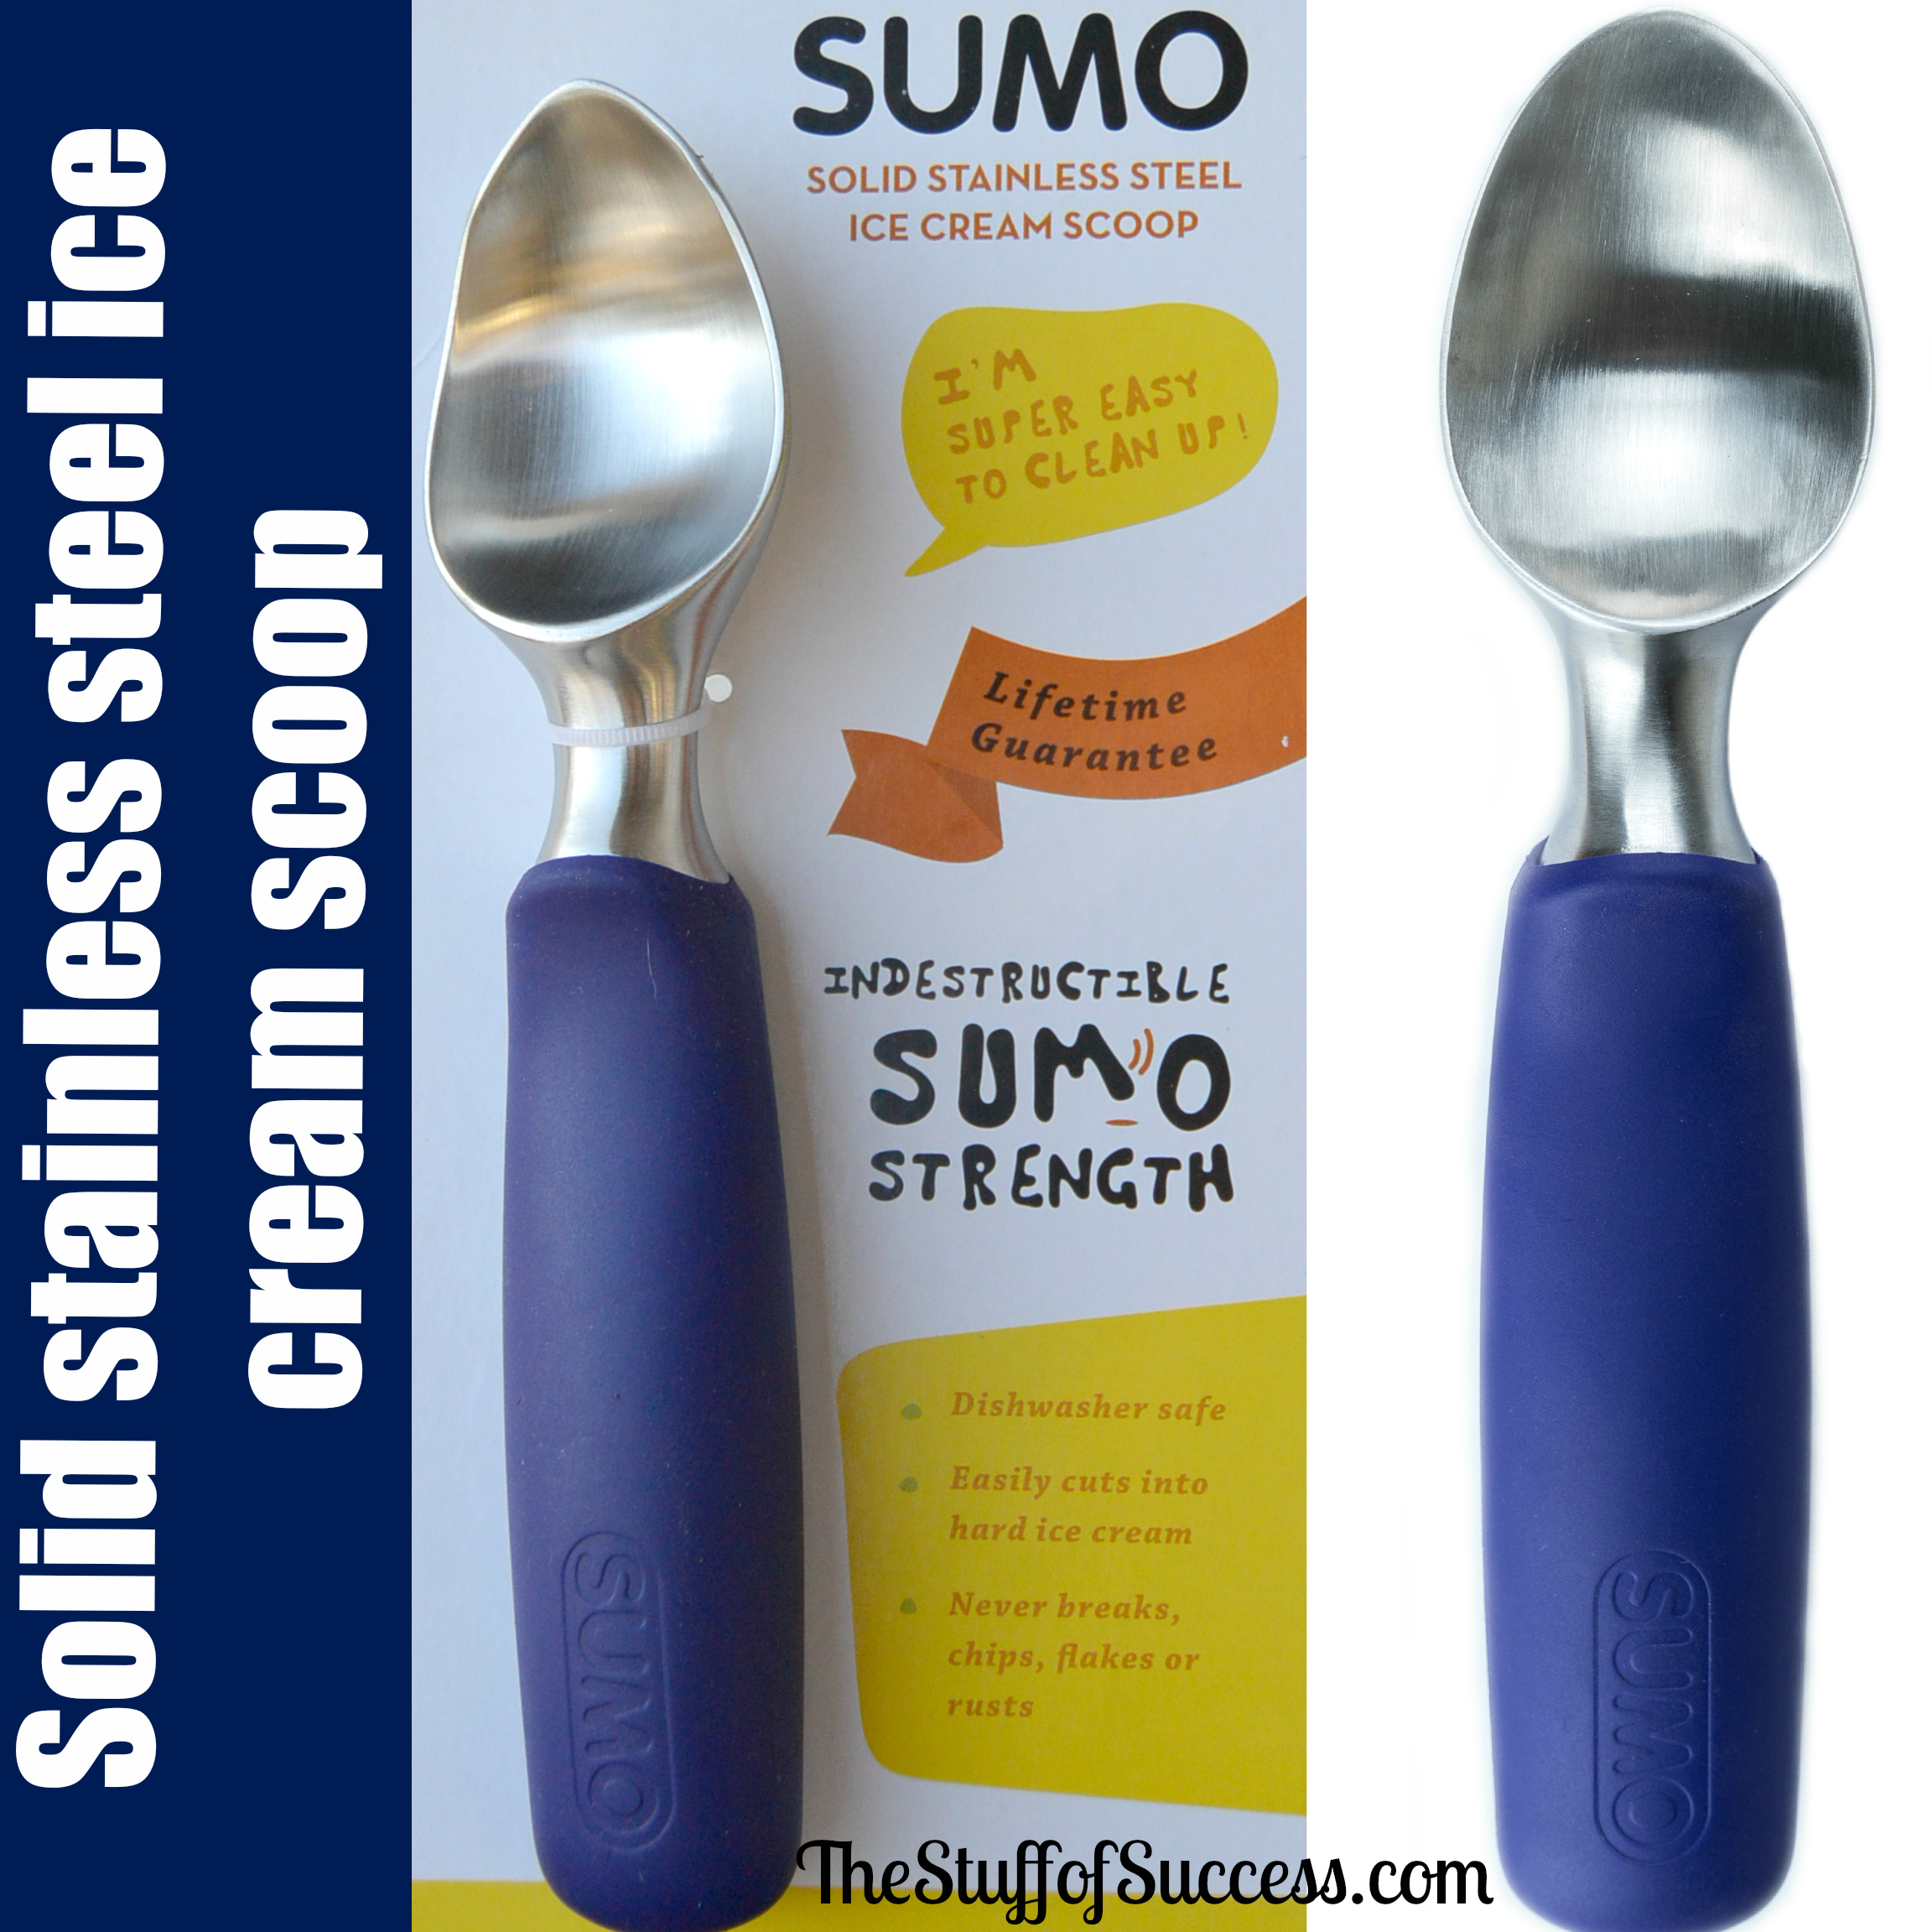 Sumo Solid Stainless Steel Ice Cream Scoop #icecreamscoop